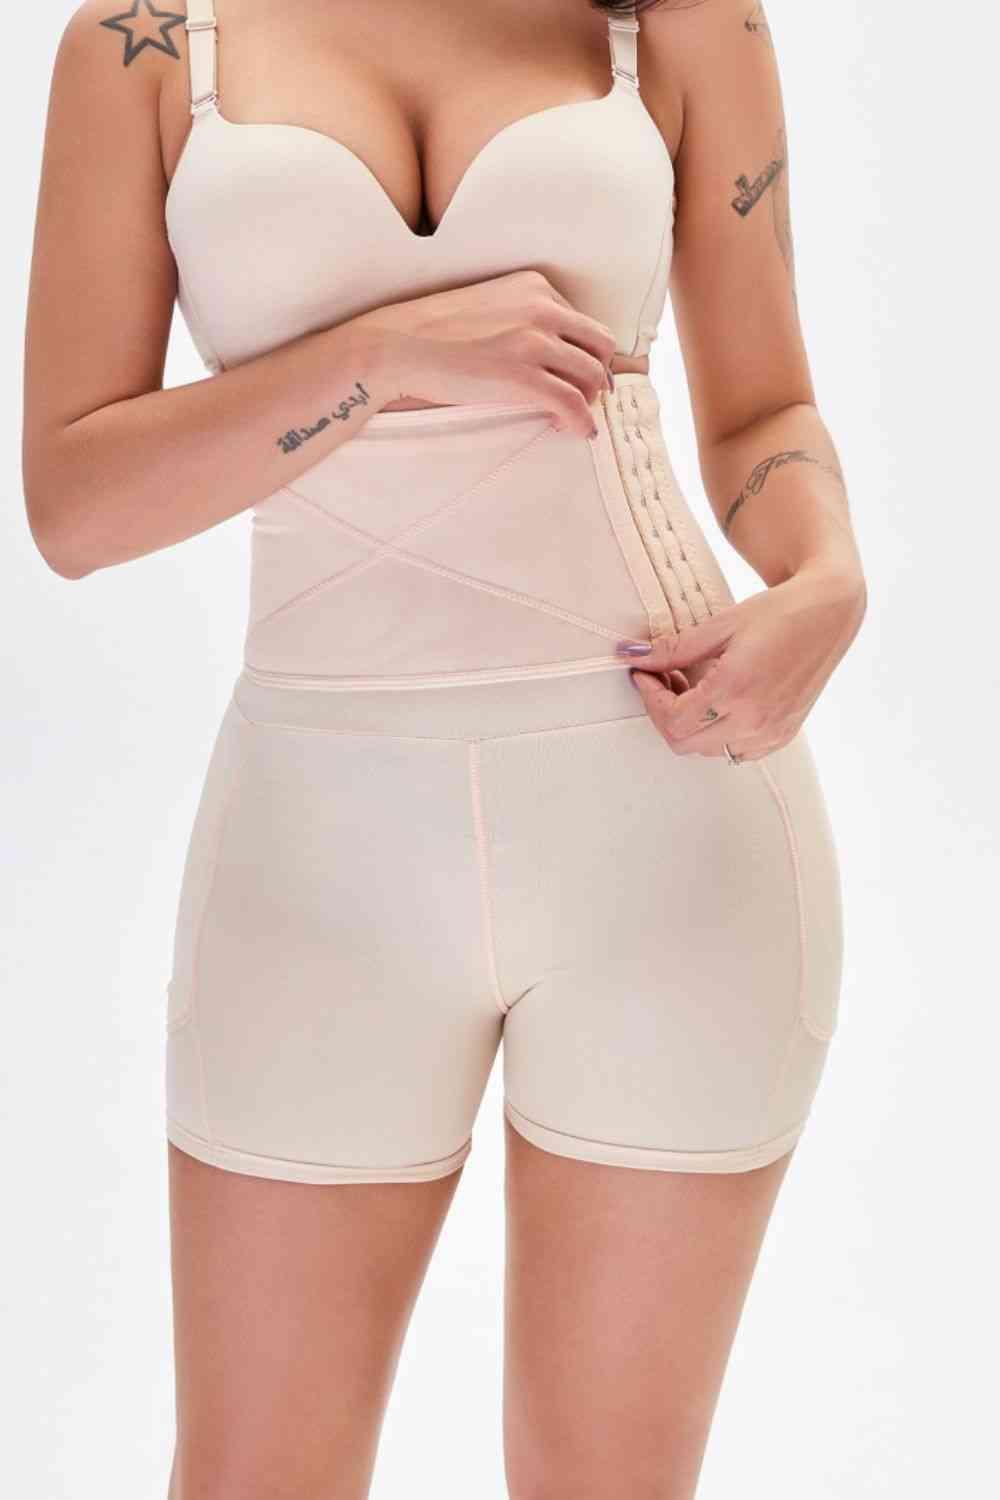 Full Size Hip Lifting Shaping Shorts - Immenzive